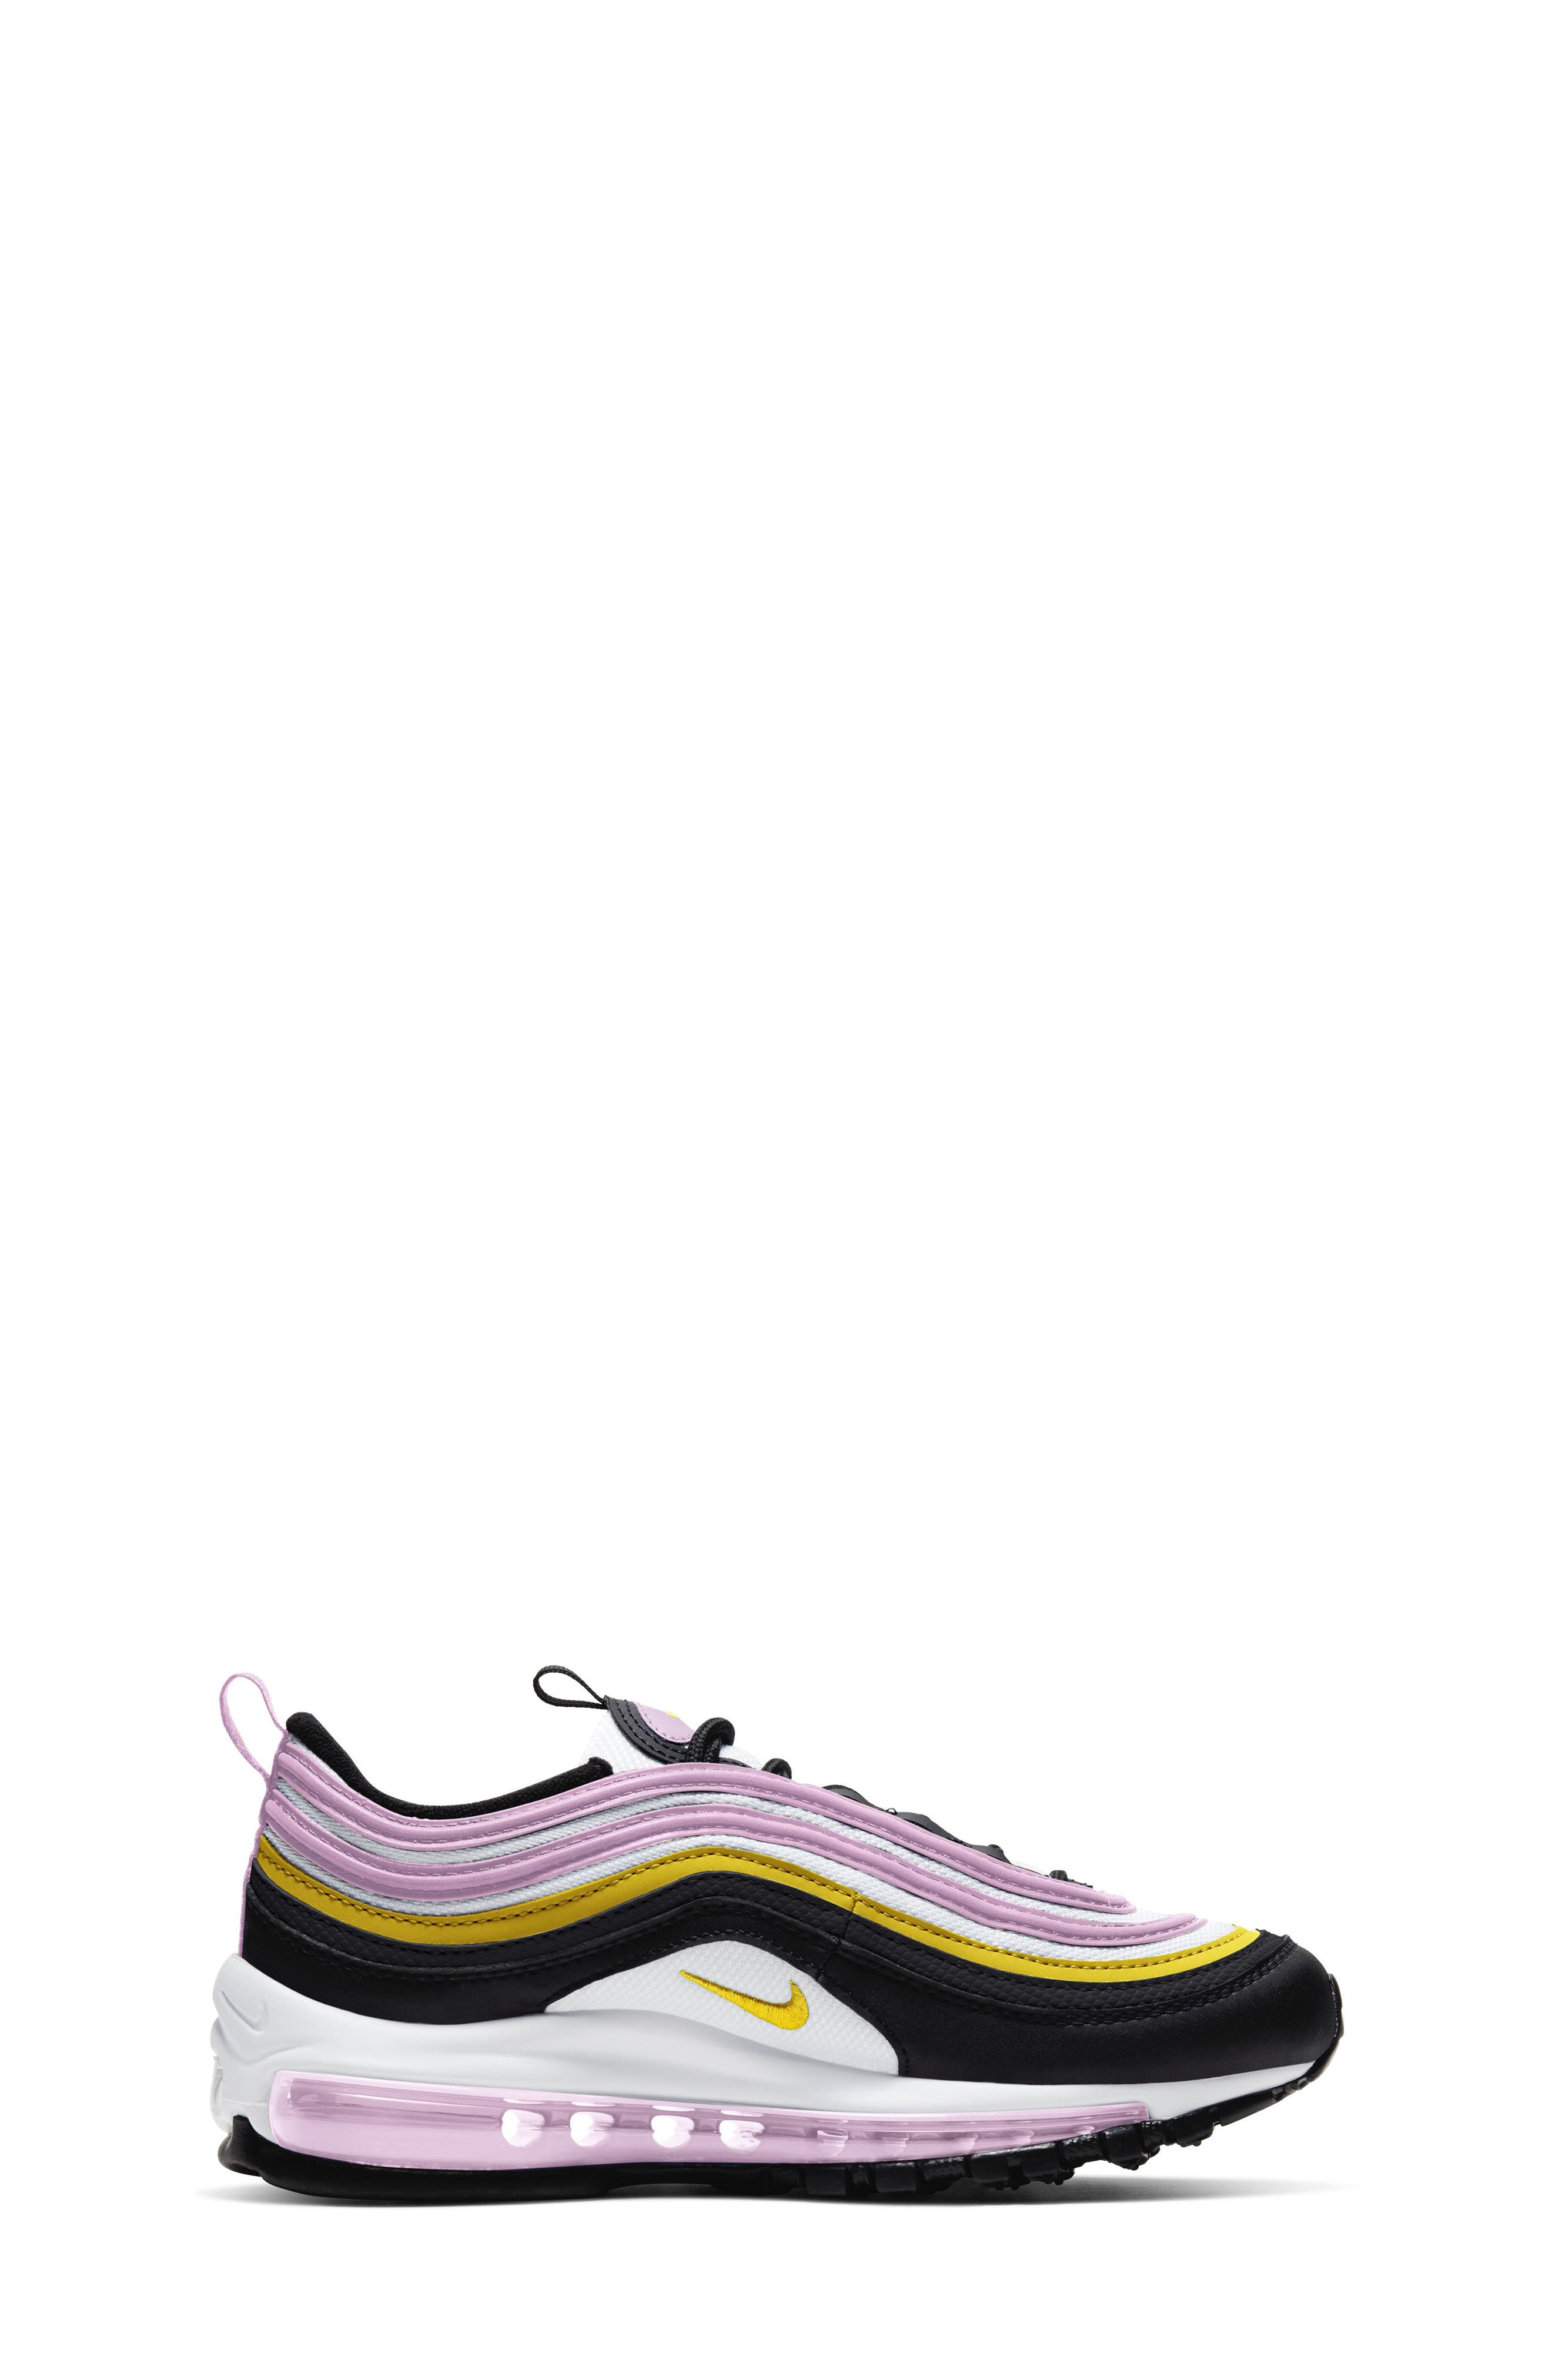 boys purple tennis shoes